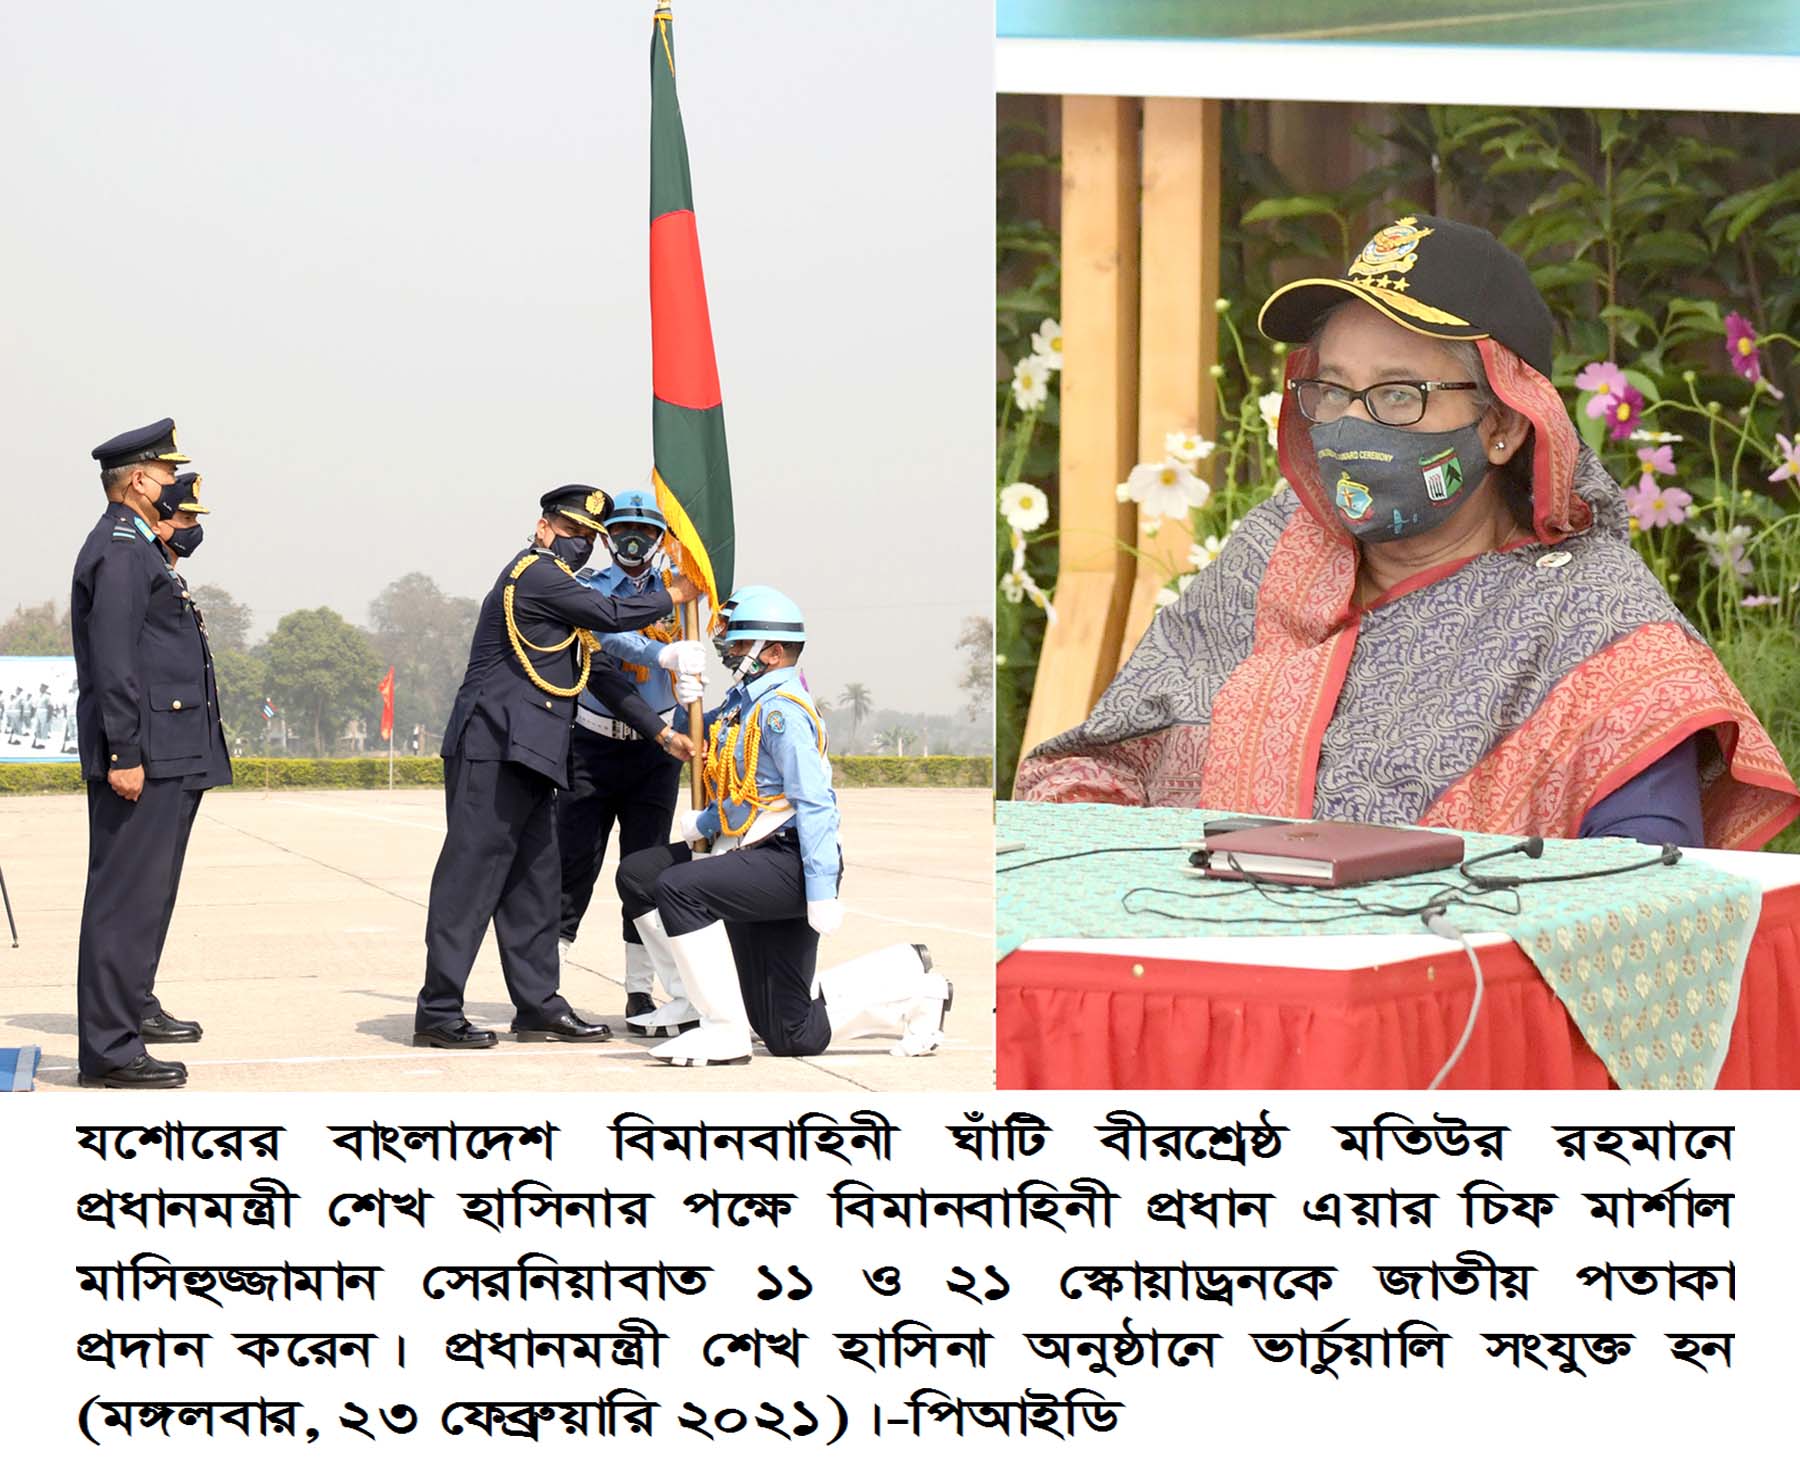 Sheikh Hasina attends Biman Bahini event